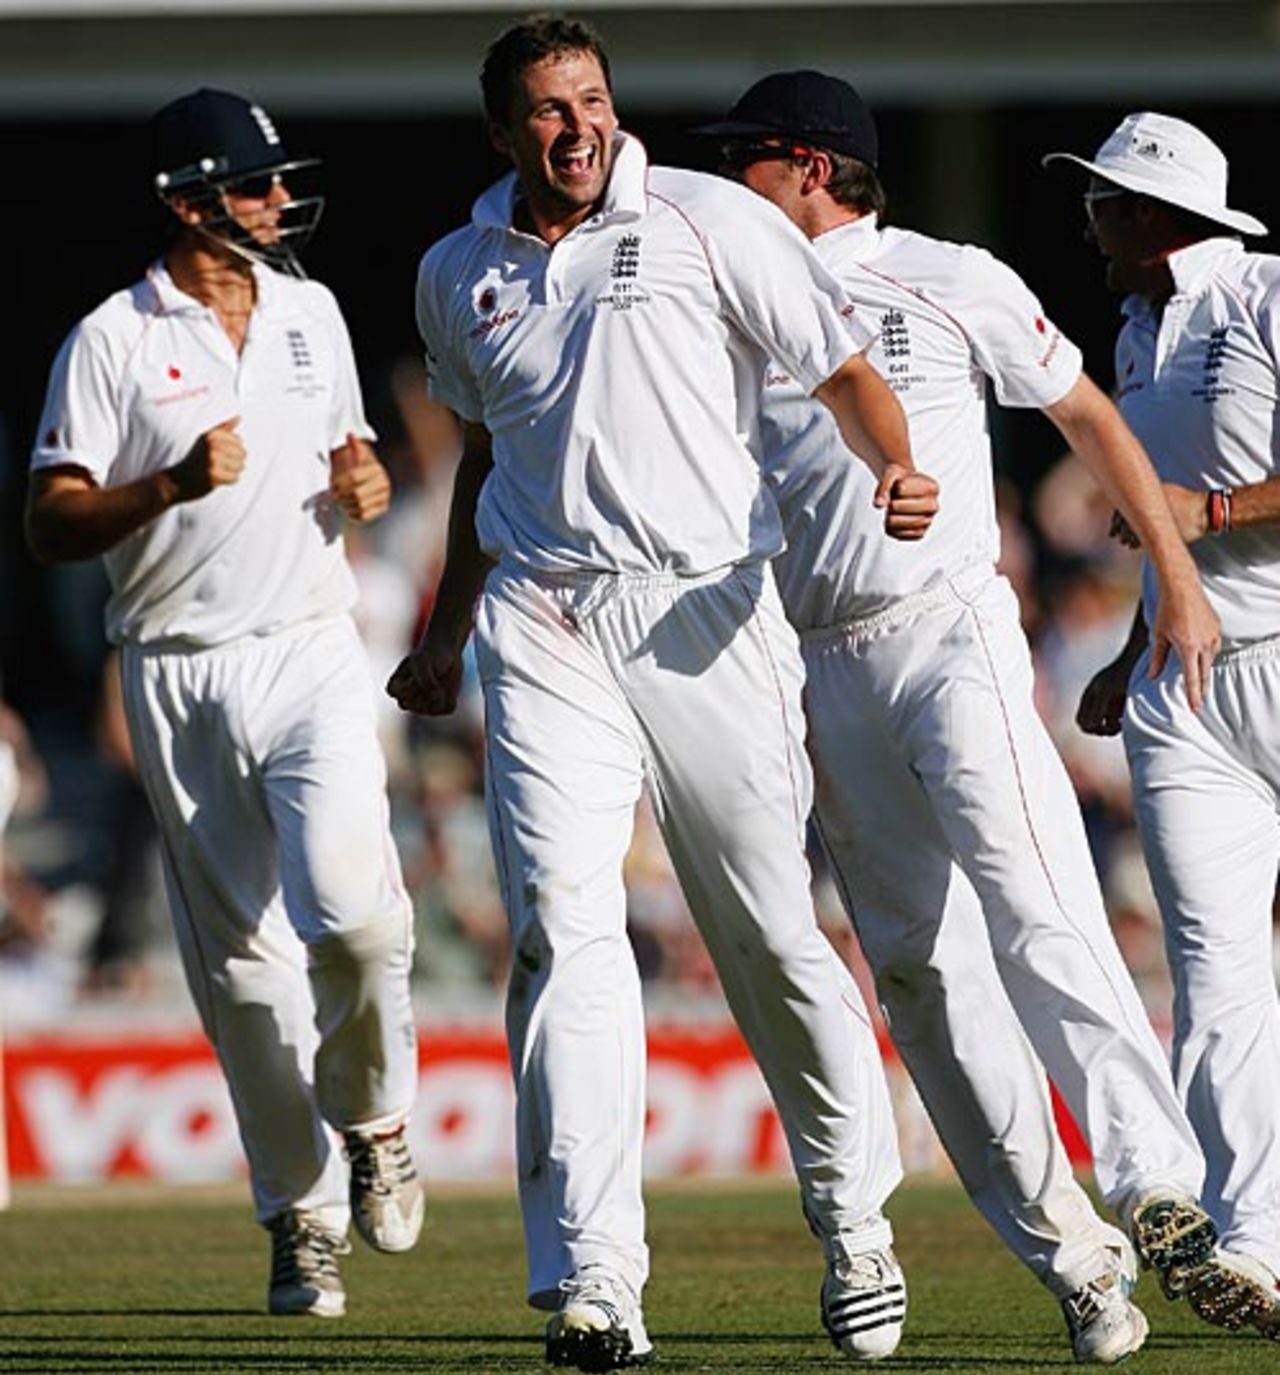 Steve Harmison dismissed Mitchell Johnson and Stuart Clark off consecutive balls, England v Australia, 5th Test, The Oval, 4th day, August 23, 2009